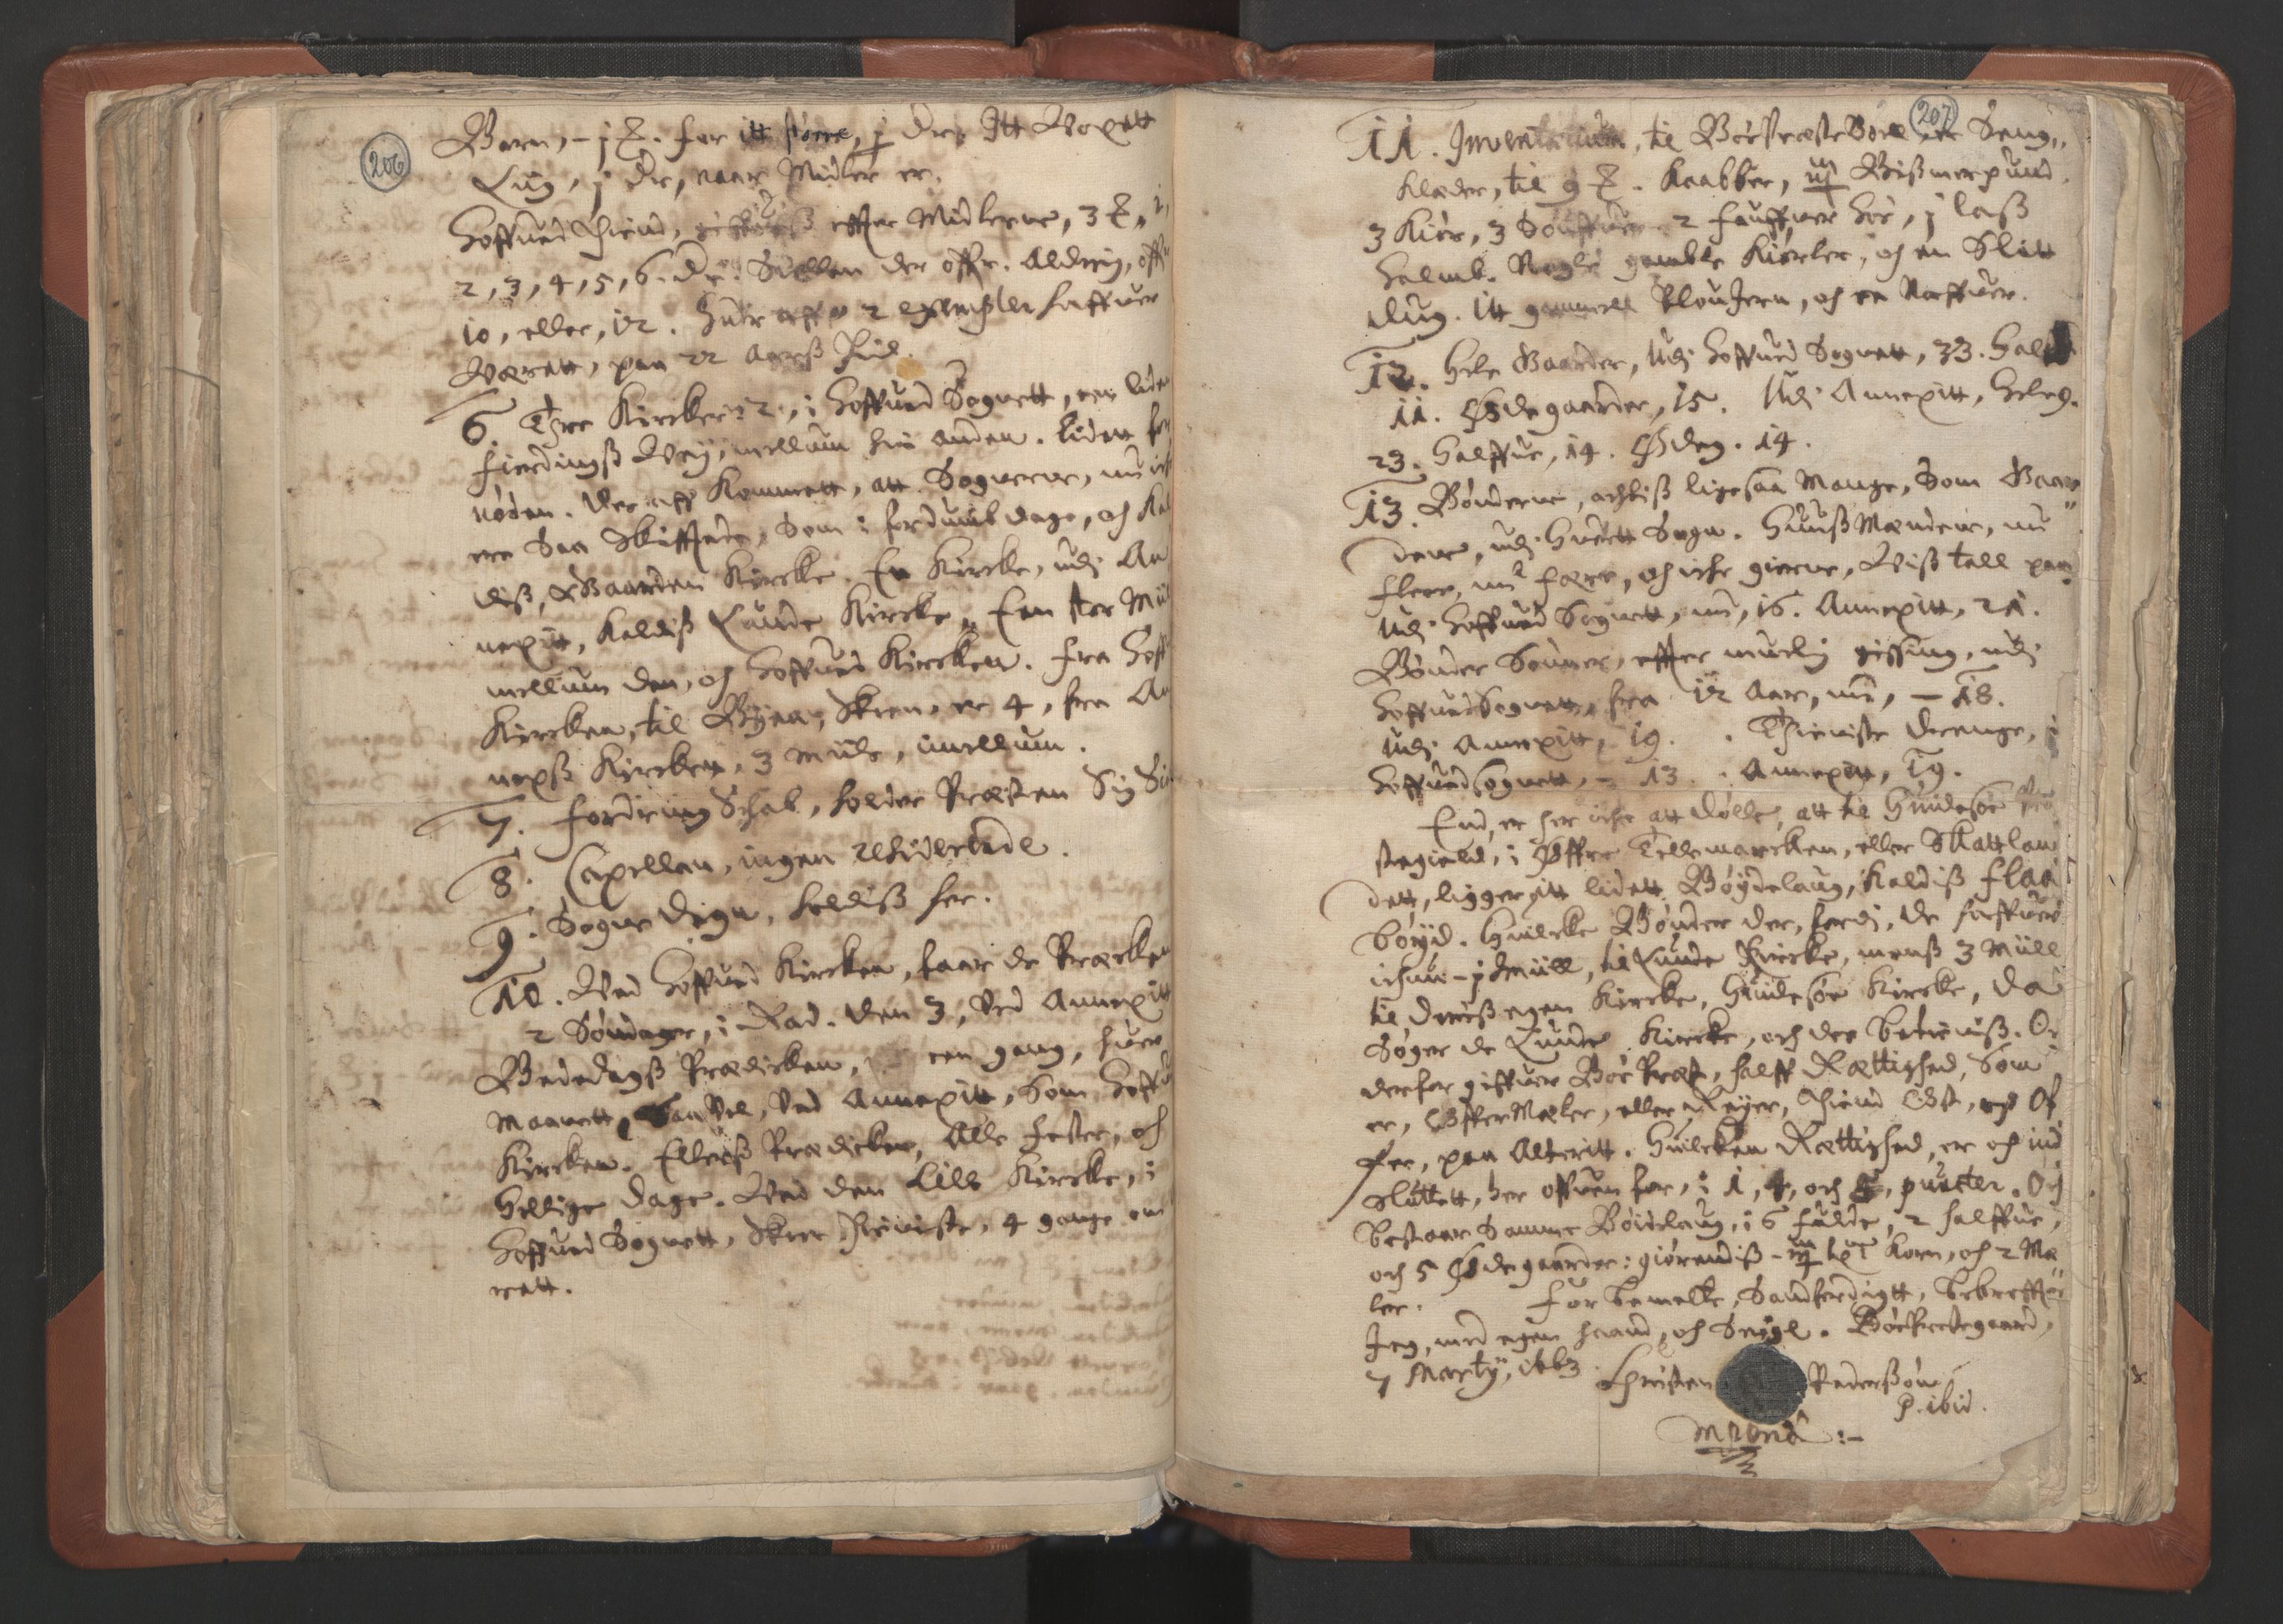 RA, Vicar's Census 1664-1666, no. 12: Øvre Telemark deanery, Nedre Telemark deanery and Bamble deanery, 1664-1666, p. 206-207